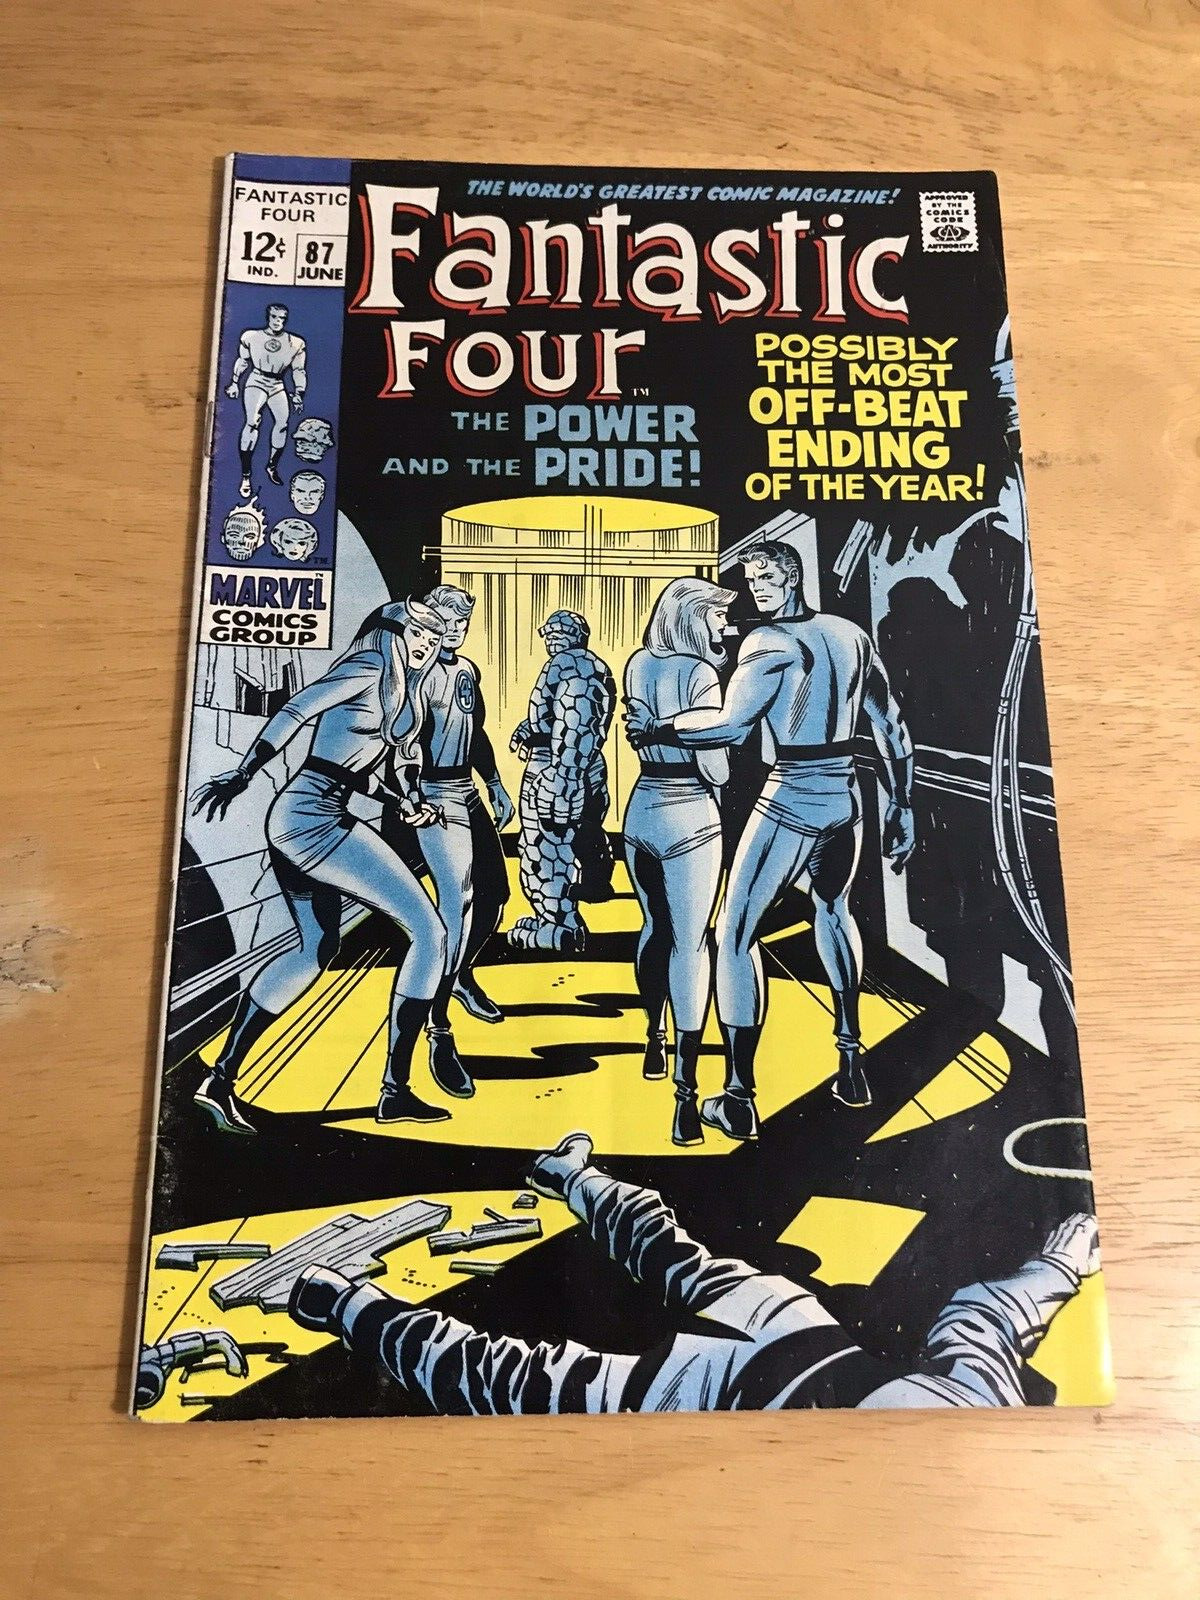 Fantastic Four #87 1969 Dr. Doom Appearance Stan Lee Story, Jack Kirby Art